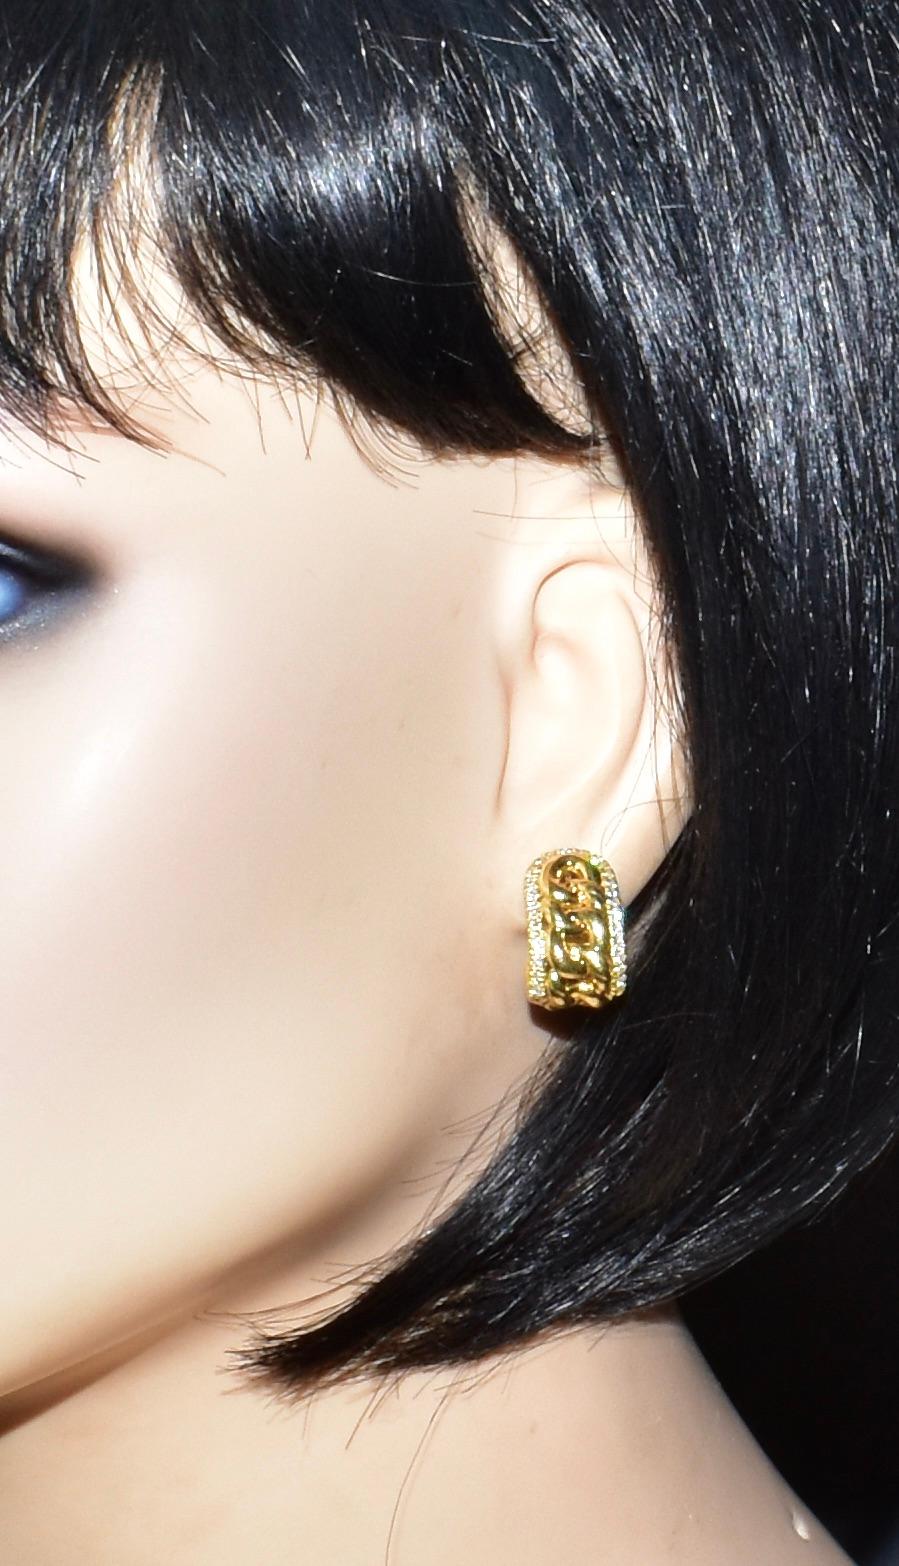 Brilliant Cut David Yurman 18K Yellow Gold and Diamond Fine Contemporary Earrings